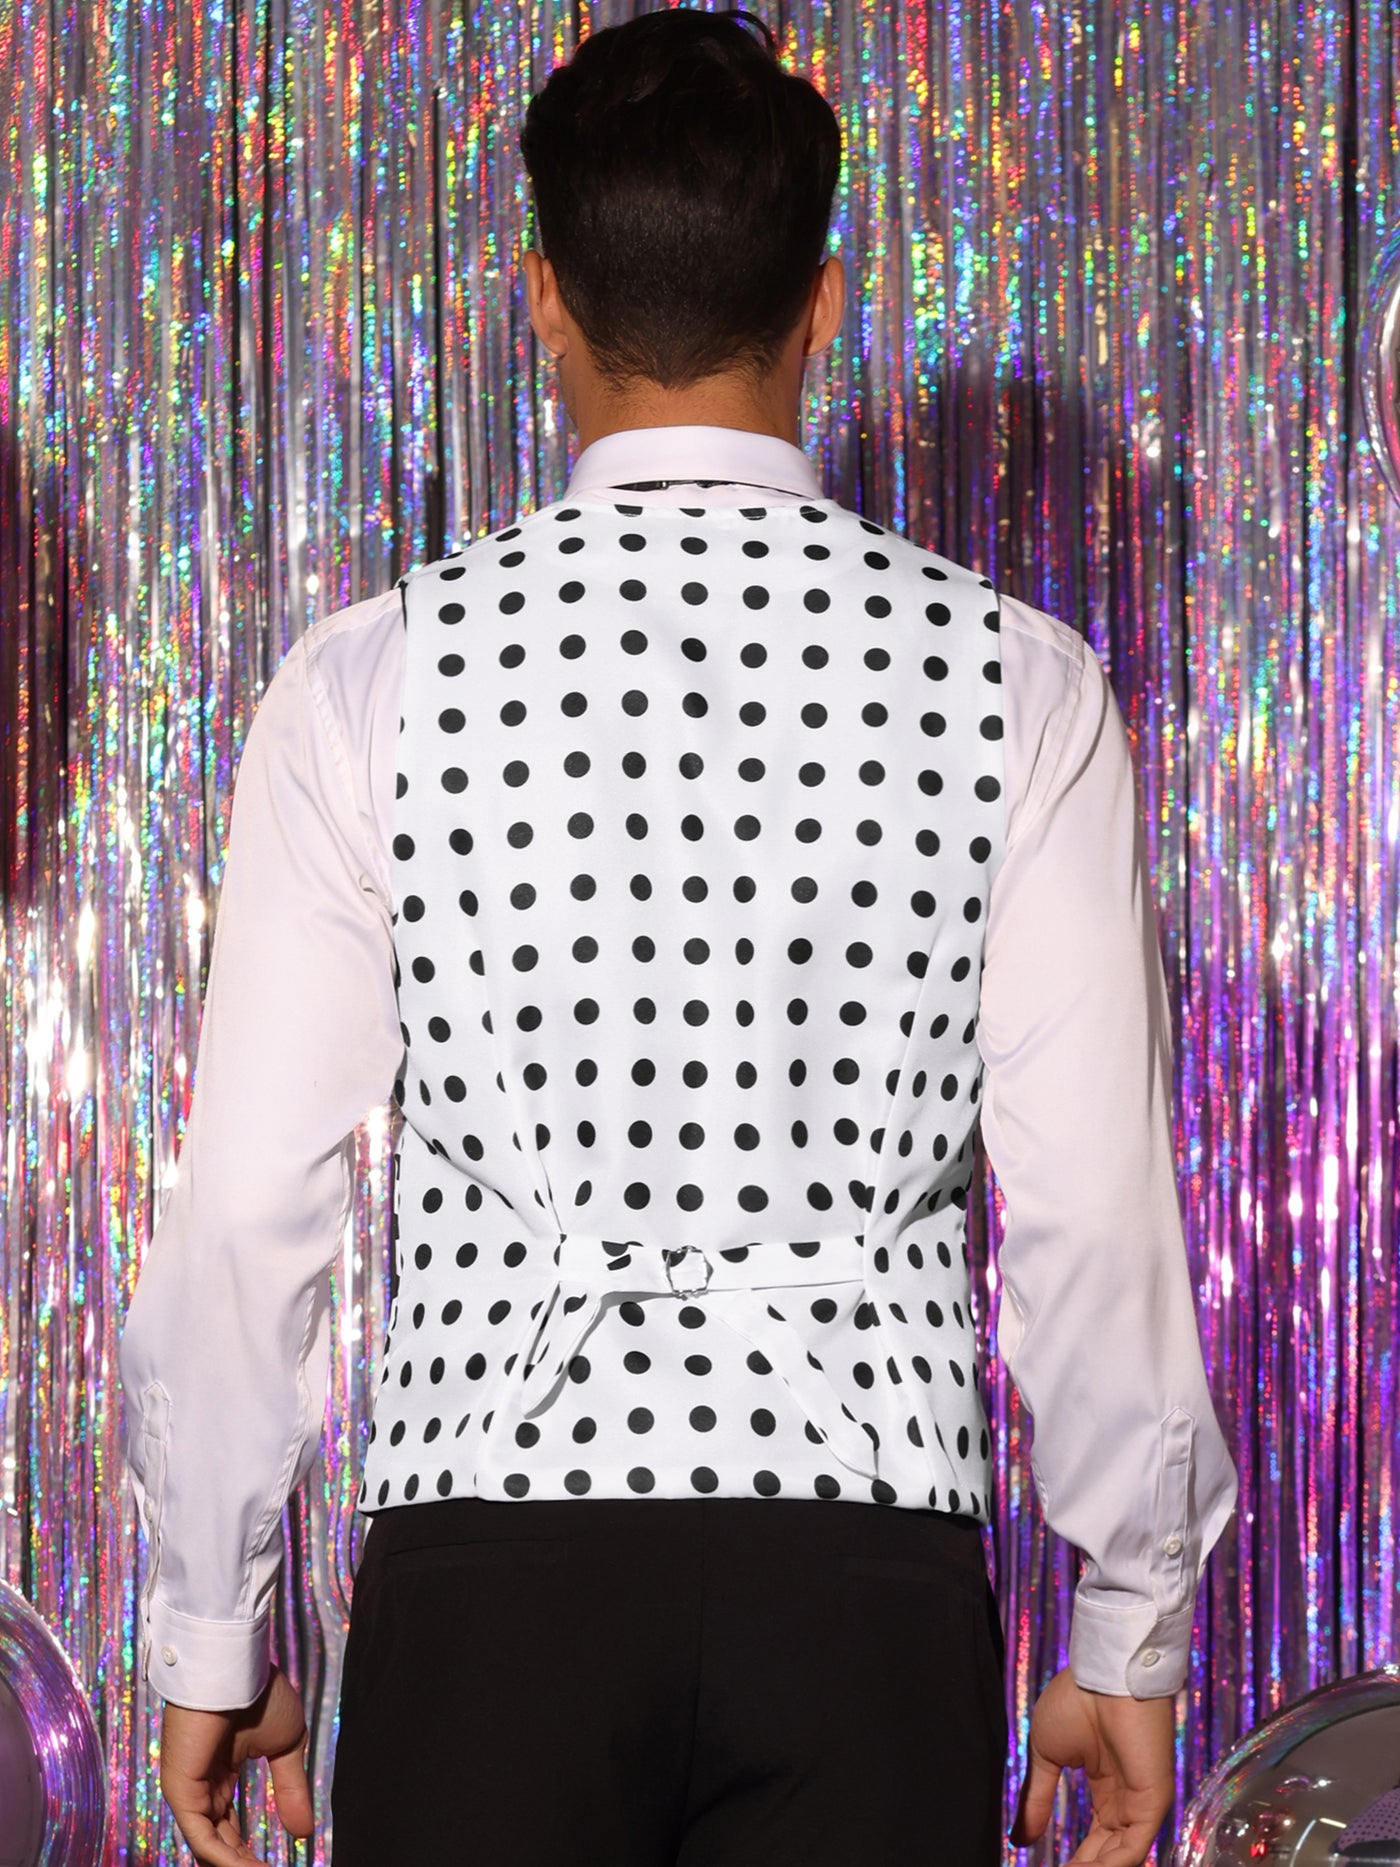 Bublédon Dress Vest for Men's Slim Fit V-Neck Sleeveless Polka Dots Pattern Waistcoat